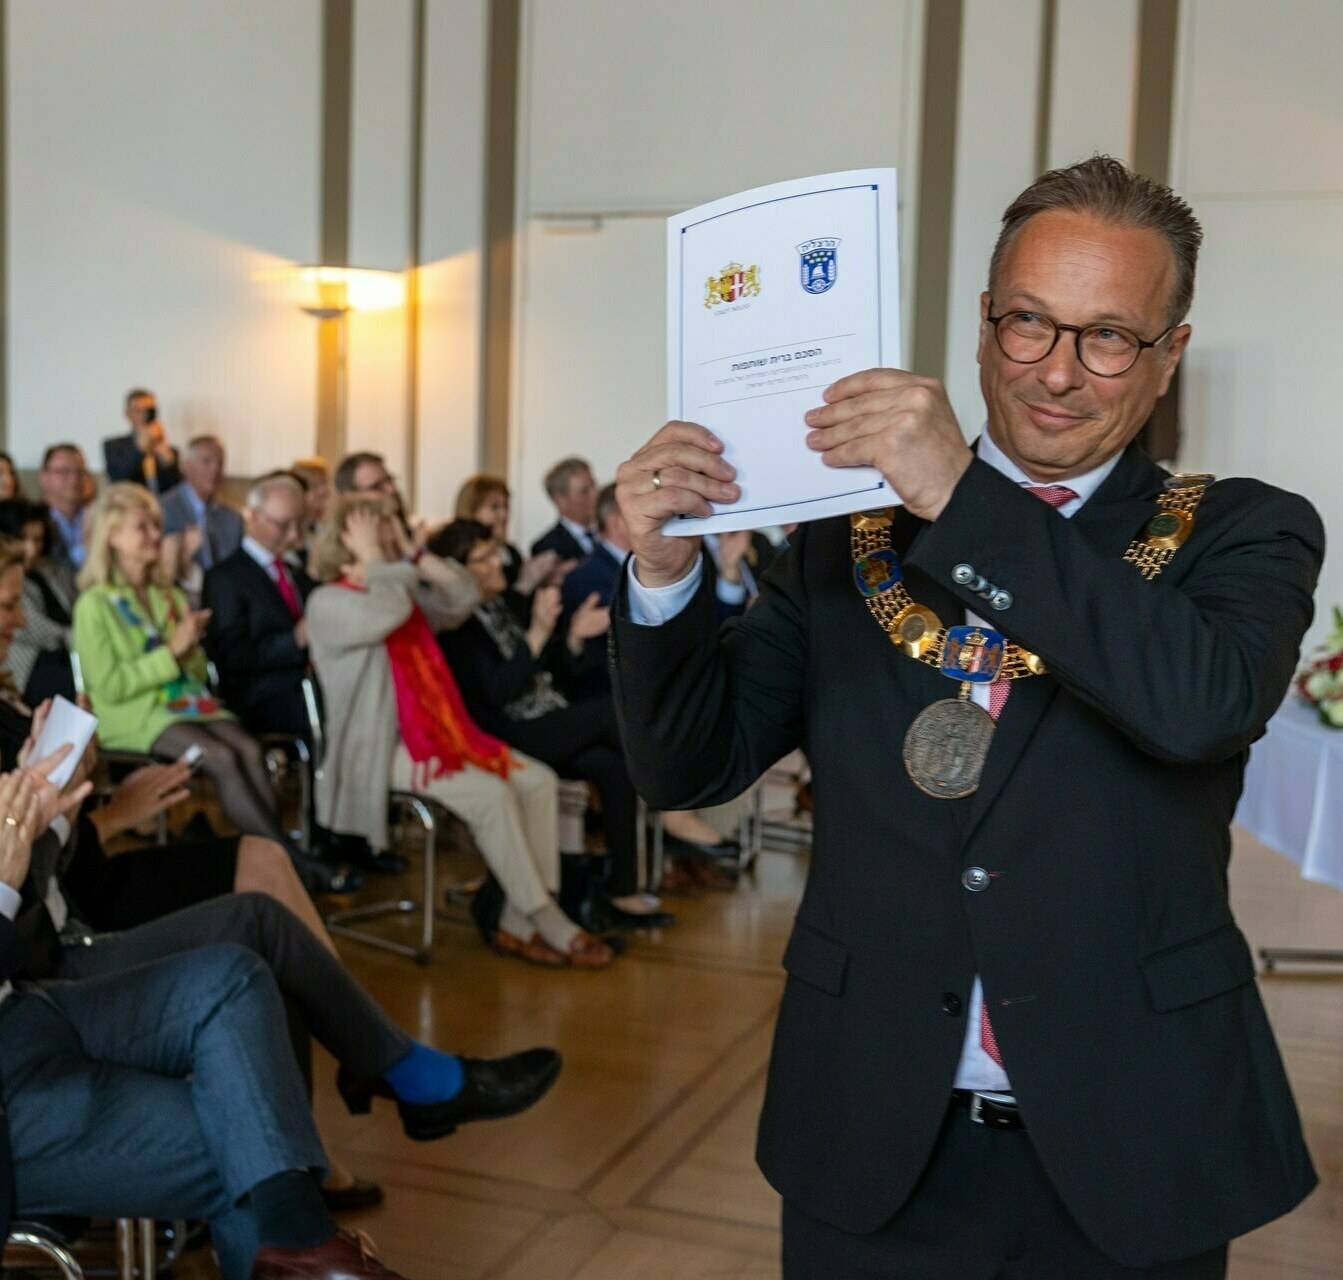 Riesenfreude bei Bürgermeister Breuer: Die Städtepartnerschaft